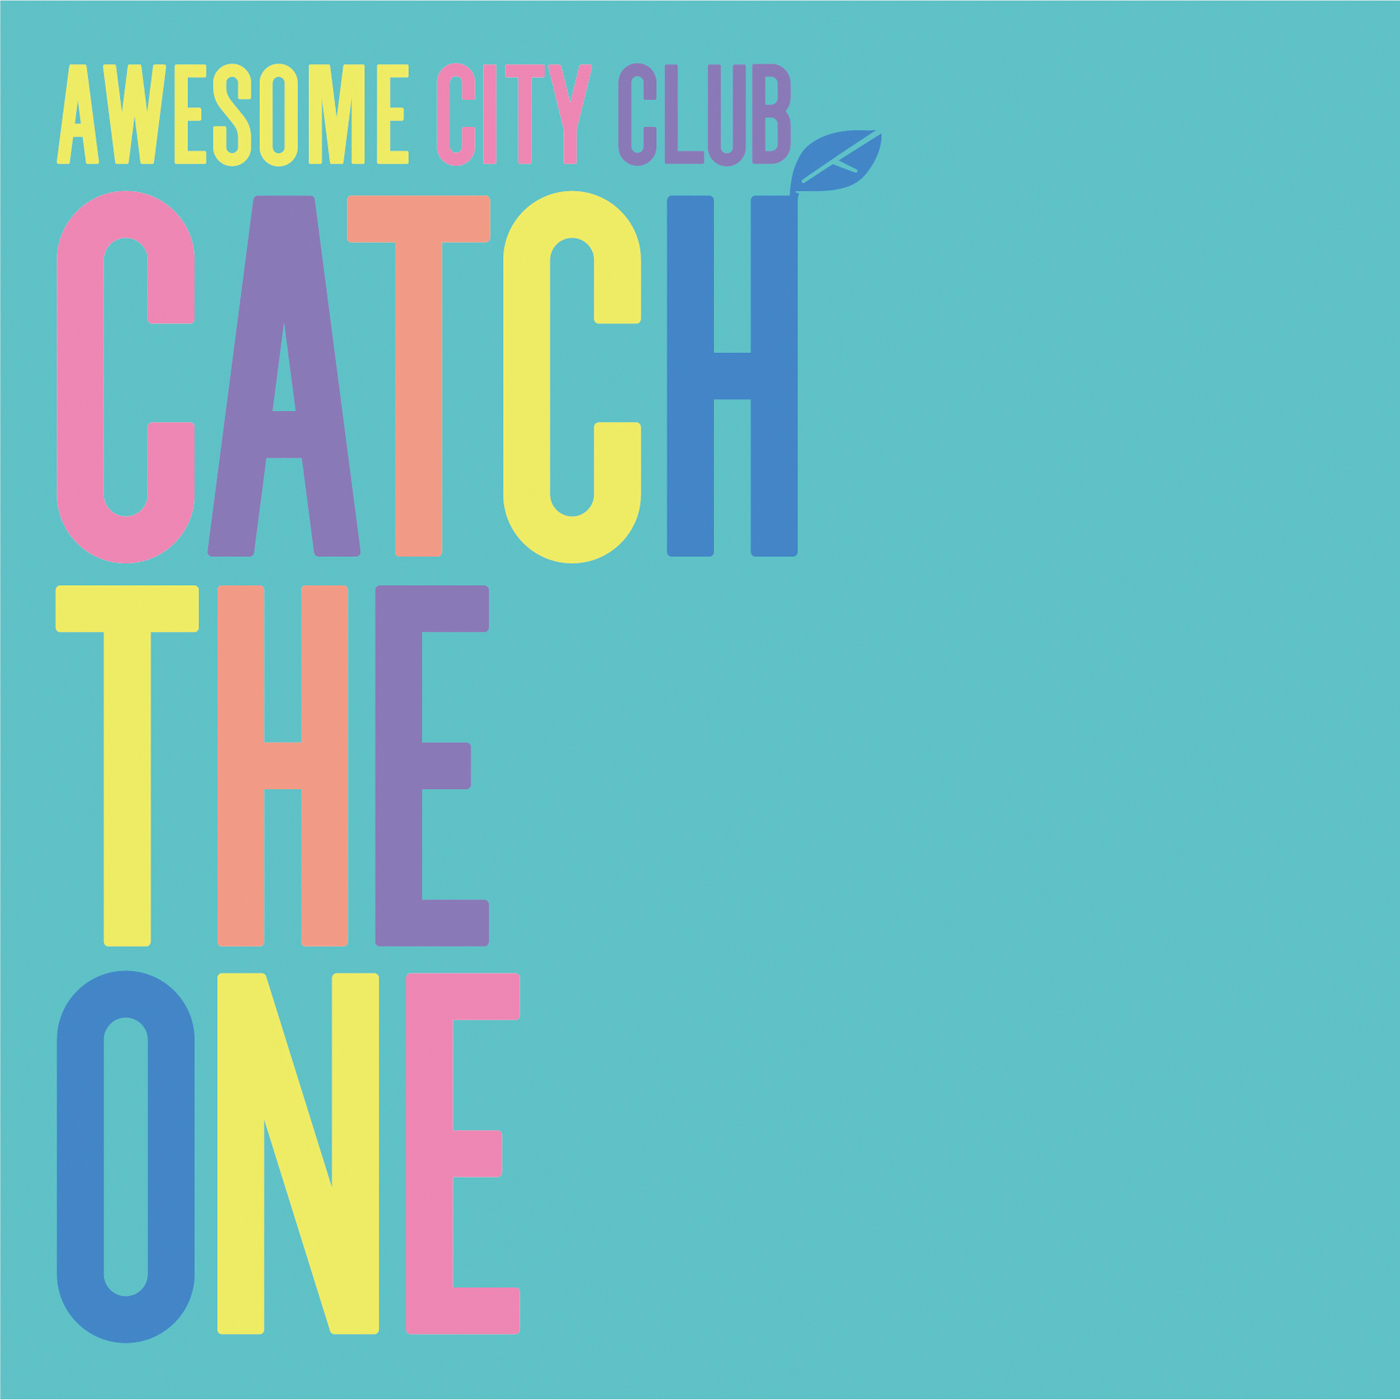 Awsome City Club (オーサムシティクラブ) 1stフルアルバム『Catch The One (キャッチ・ザ・ワン)』(2018年12月19日発売) 高画質ジャケ写